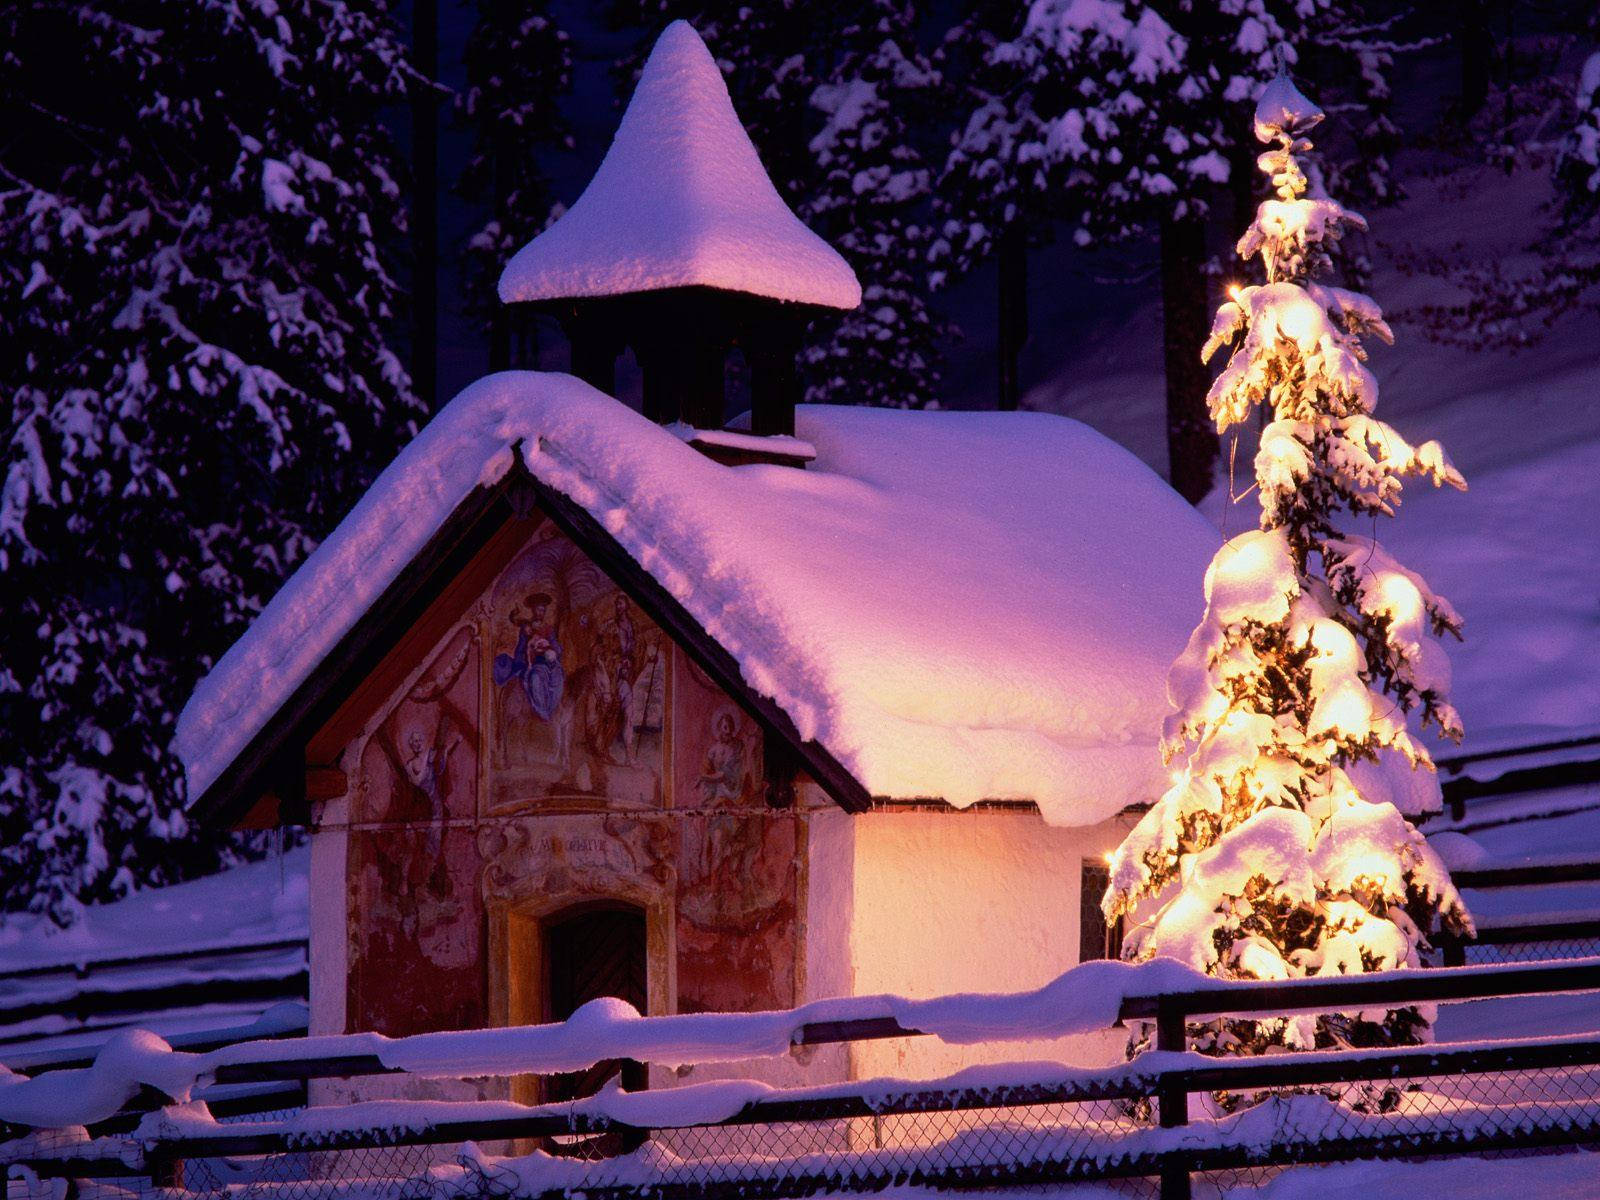 Winter Christmas Hut And Lights Wallpaper